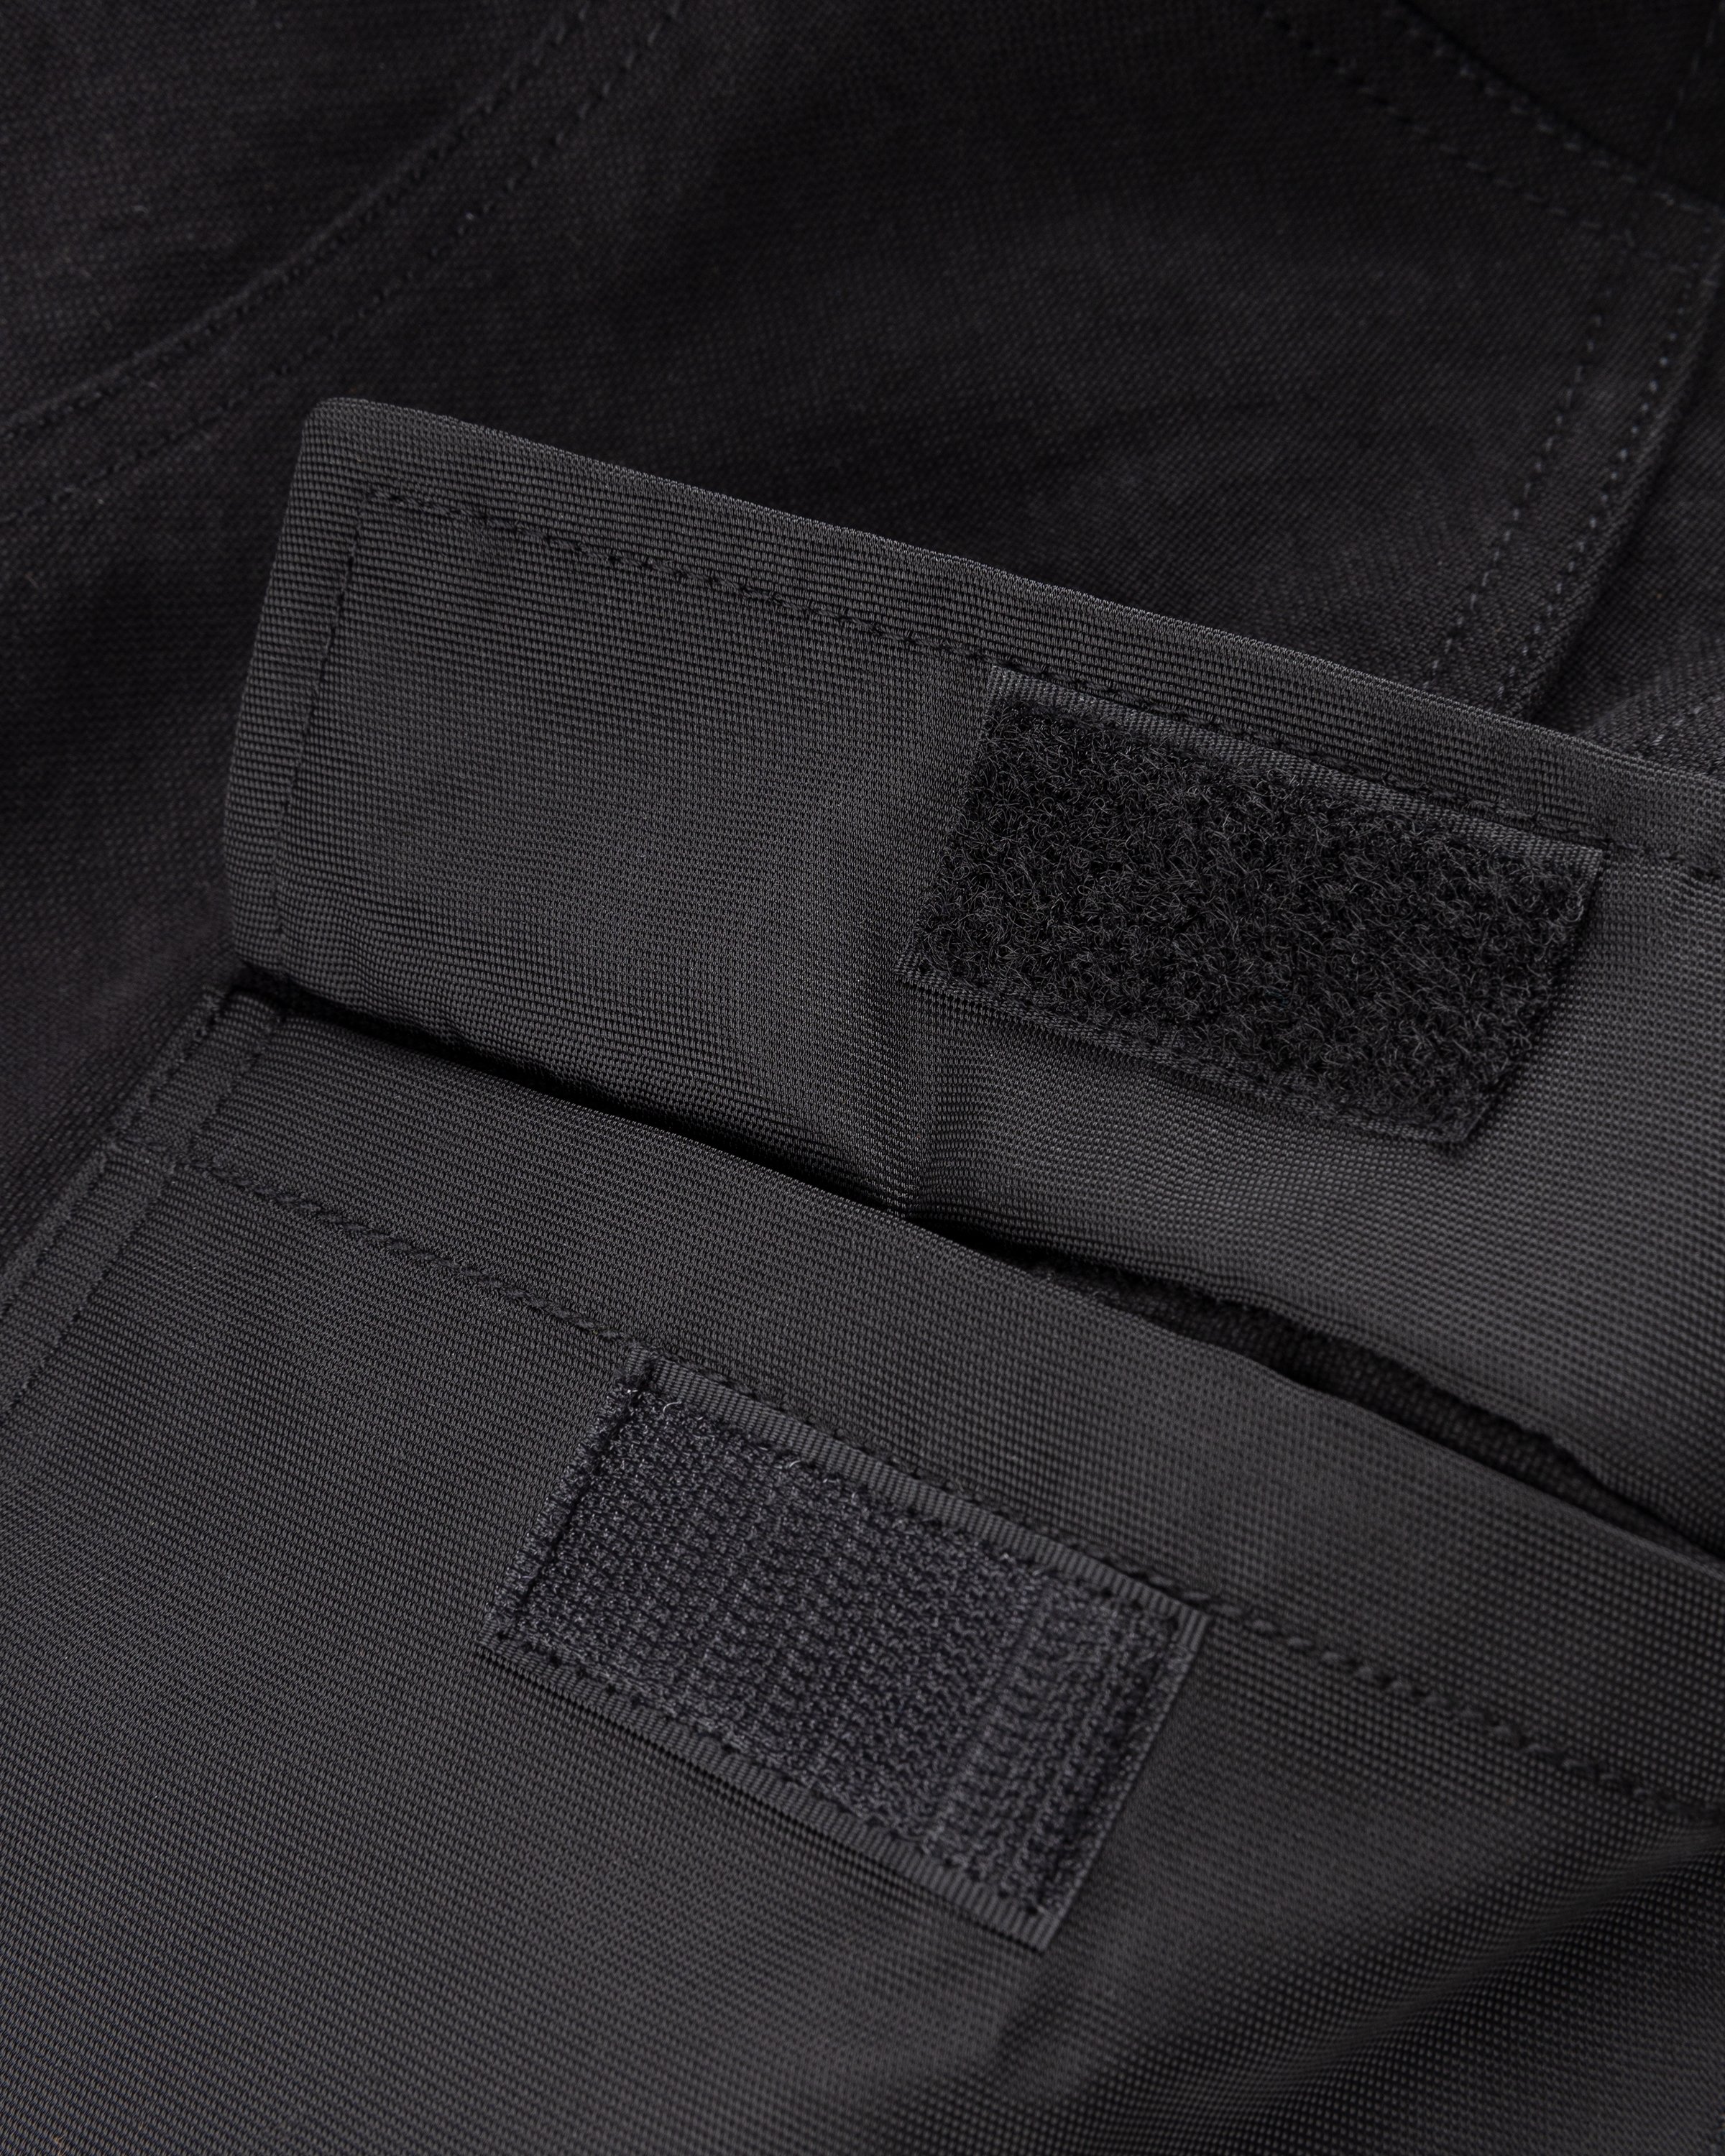 Phipps - Action Shorts Ranger Cotton Black - Clothing - Black - Image 6